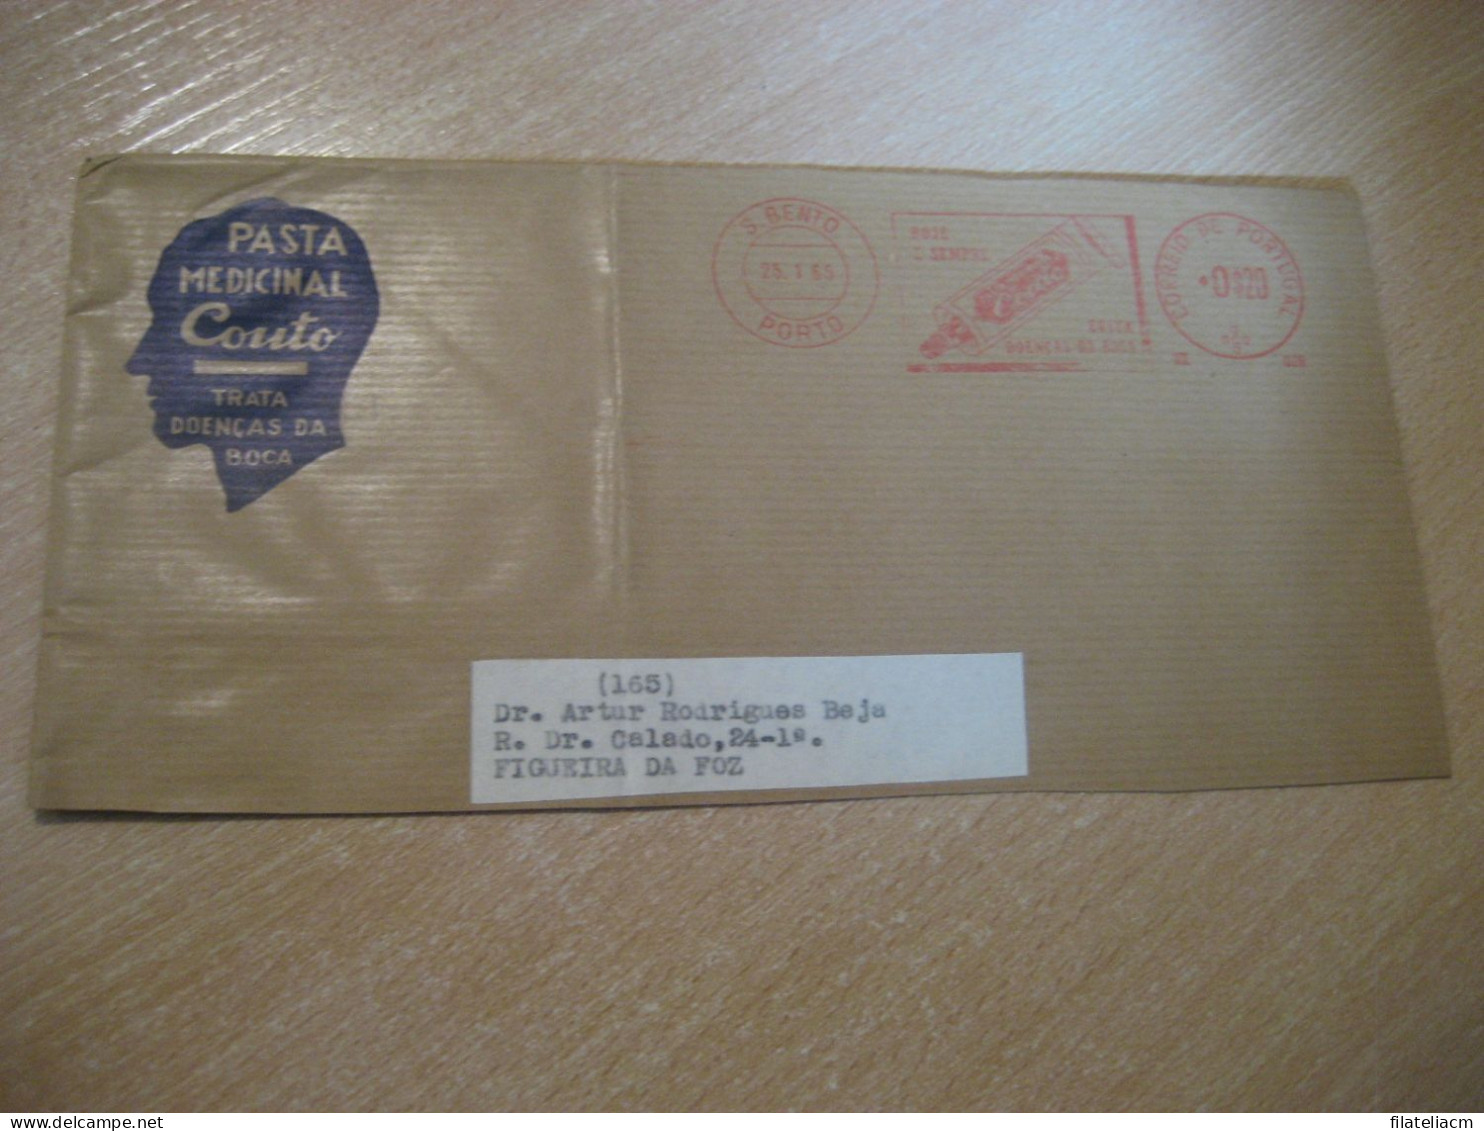 PORTO 1965 T Figueira Da Foz Pasta Medicinal COUTO Boca Pharmacy Health Sante Meter Mail Cancel Cut Cuted Cover PORTUGAL - Lettres & Documents